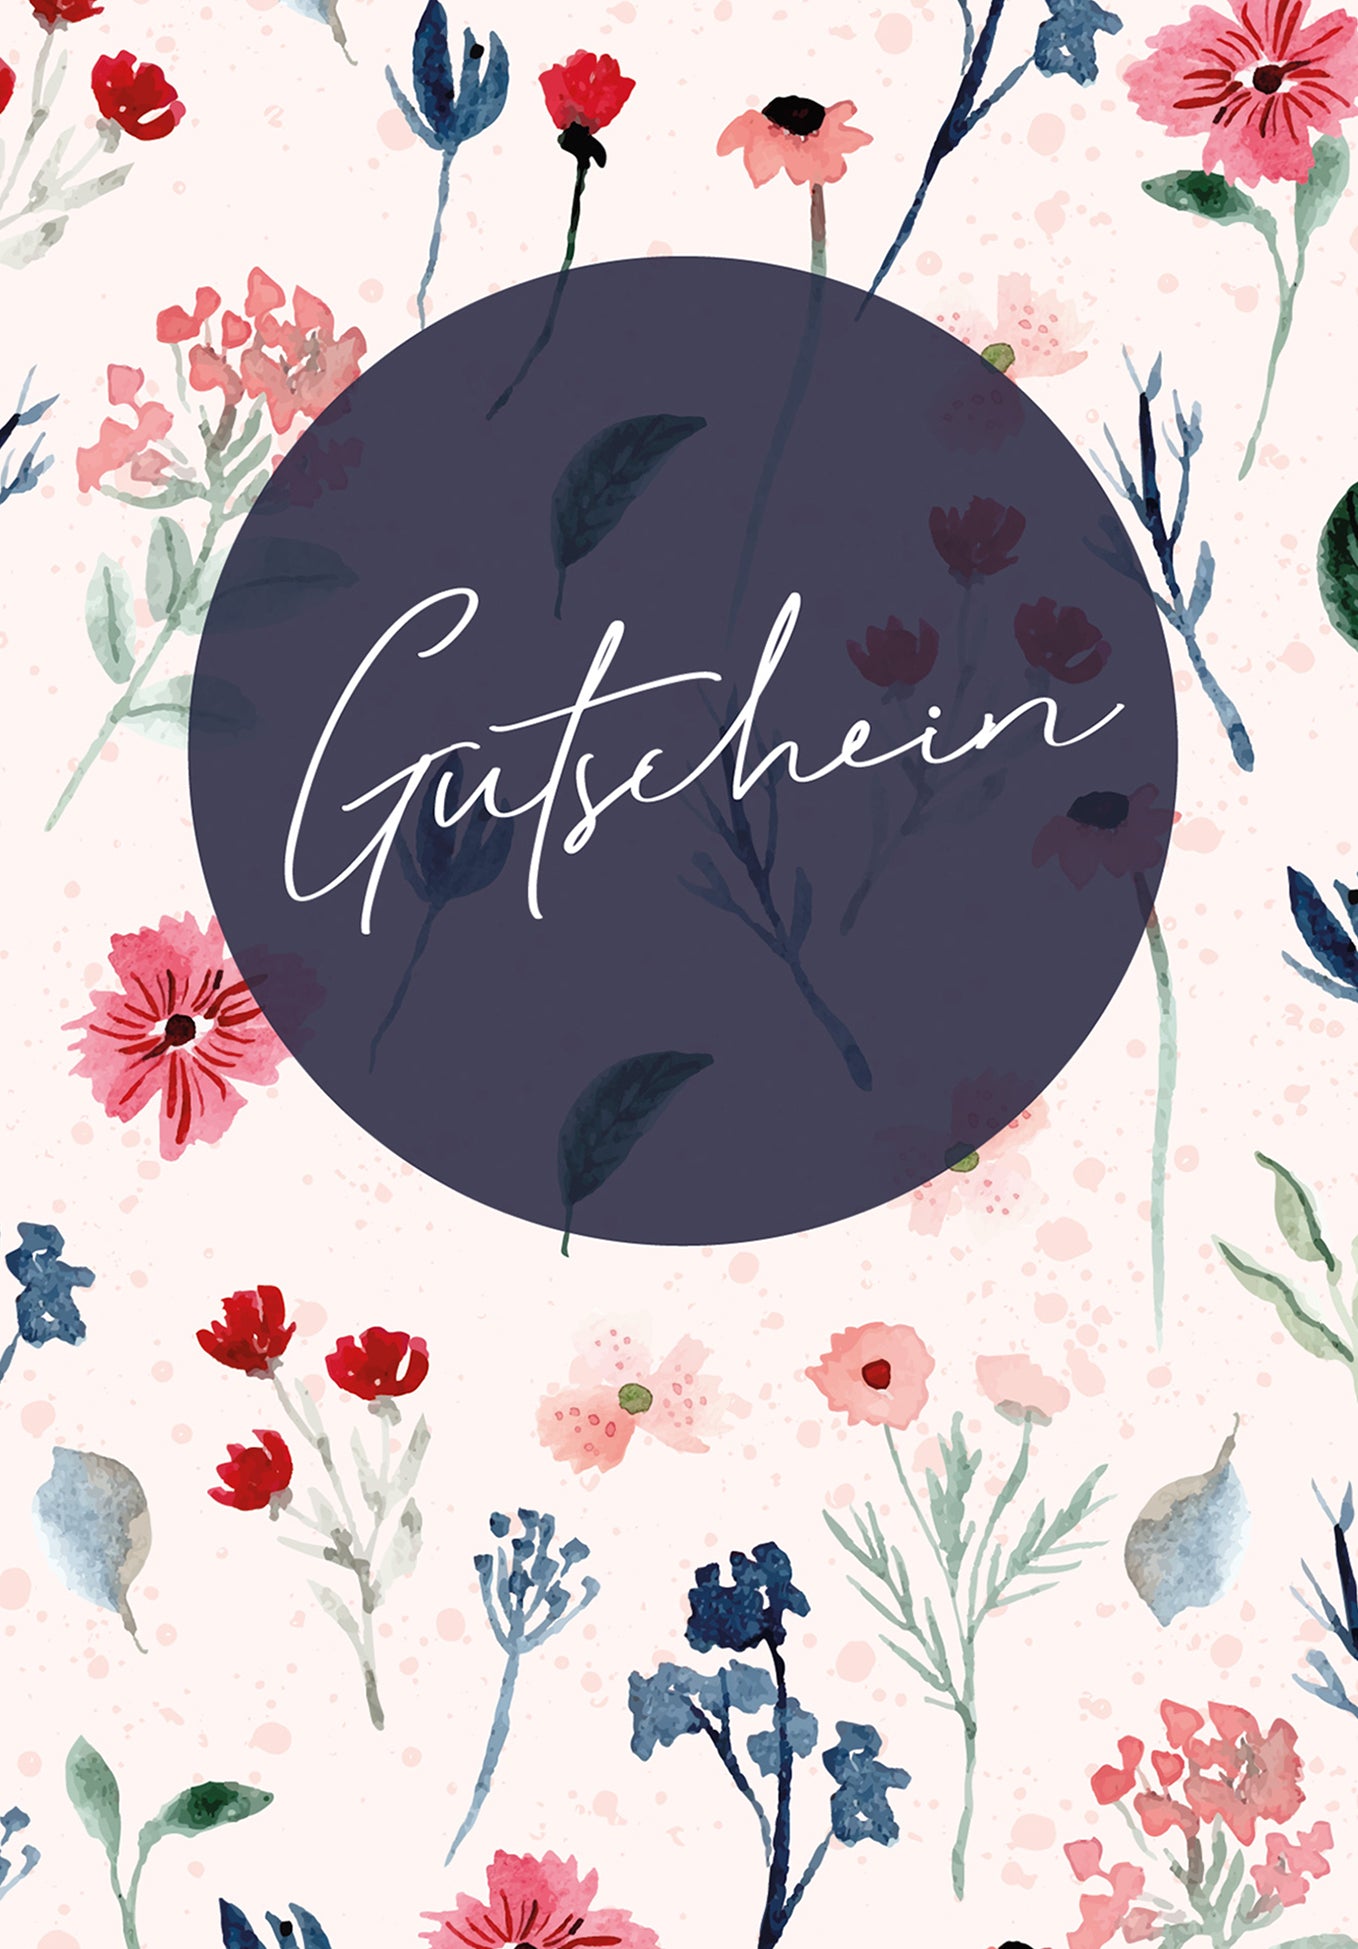 Gutschein - Aquarell Blumen (Grado di valore)